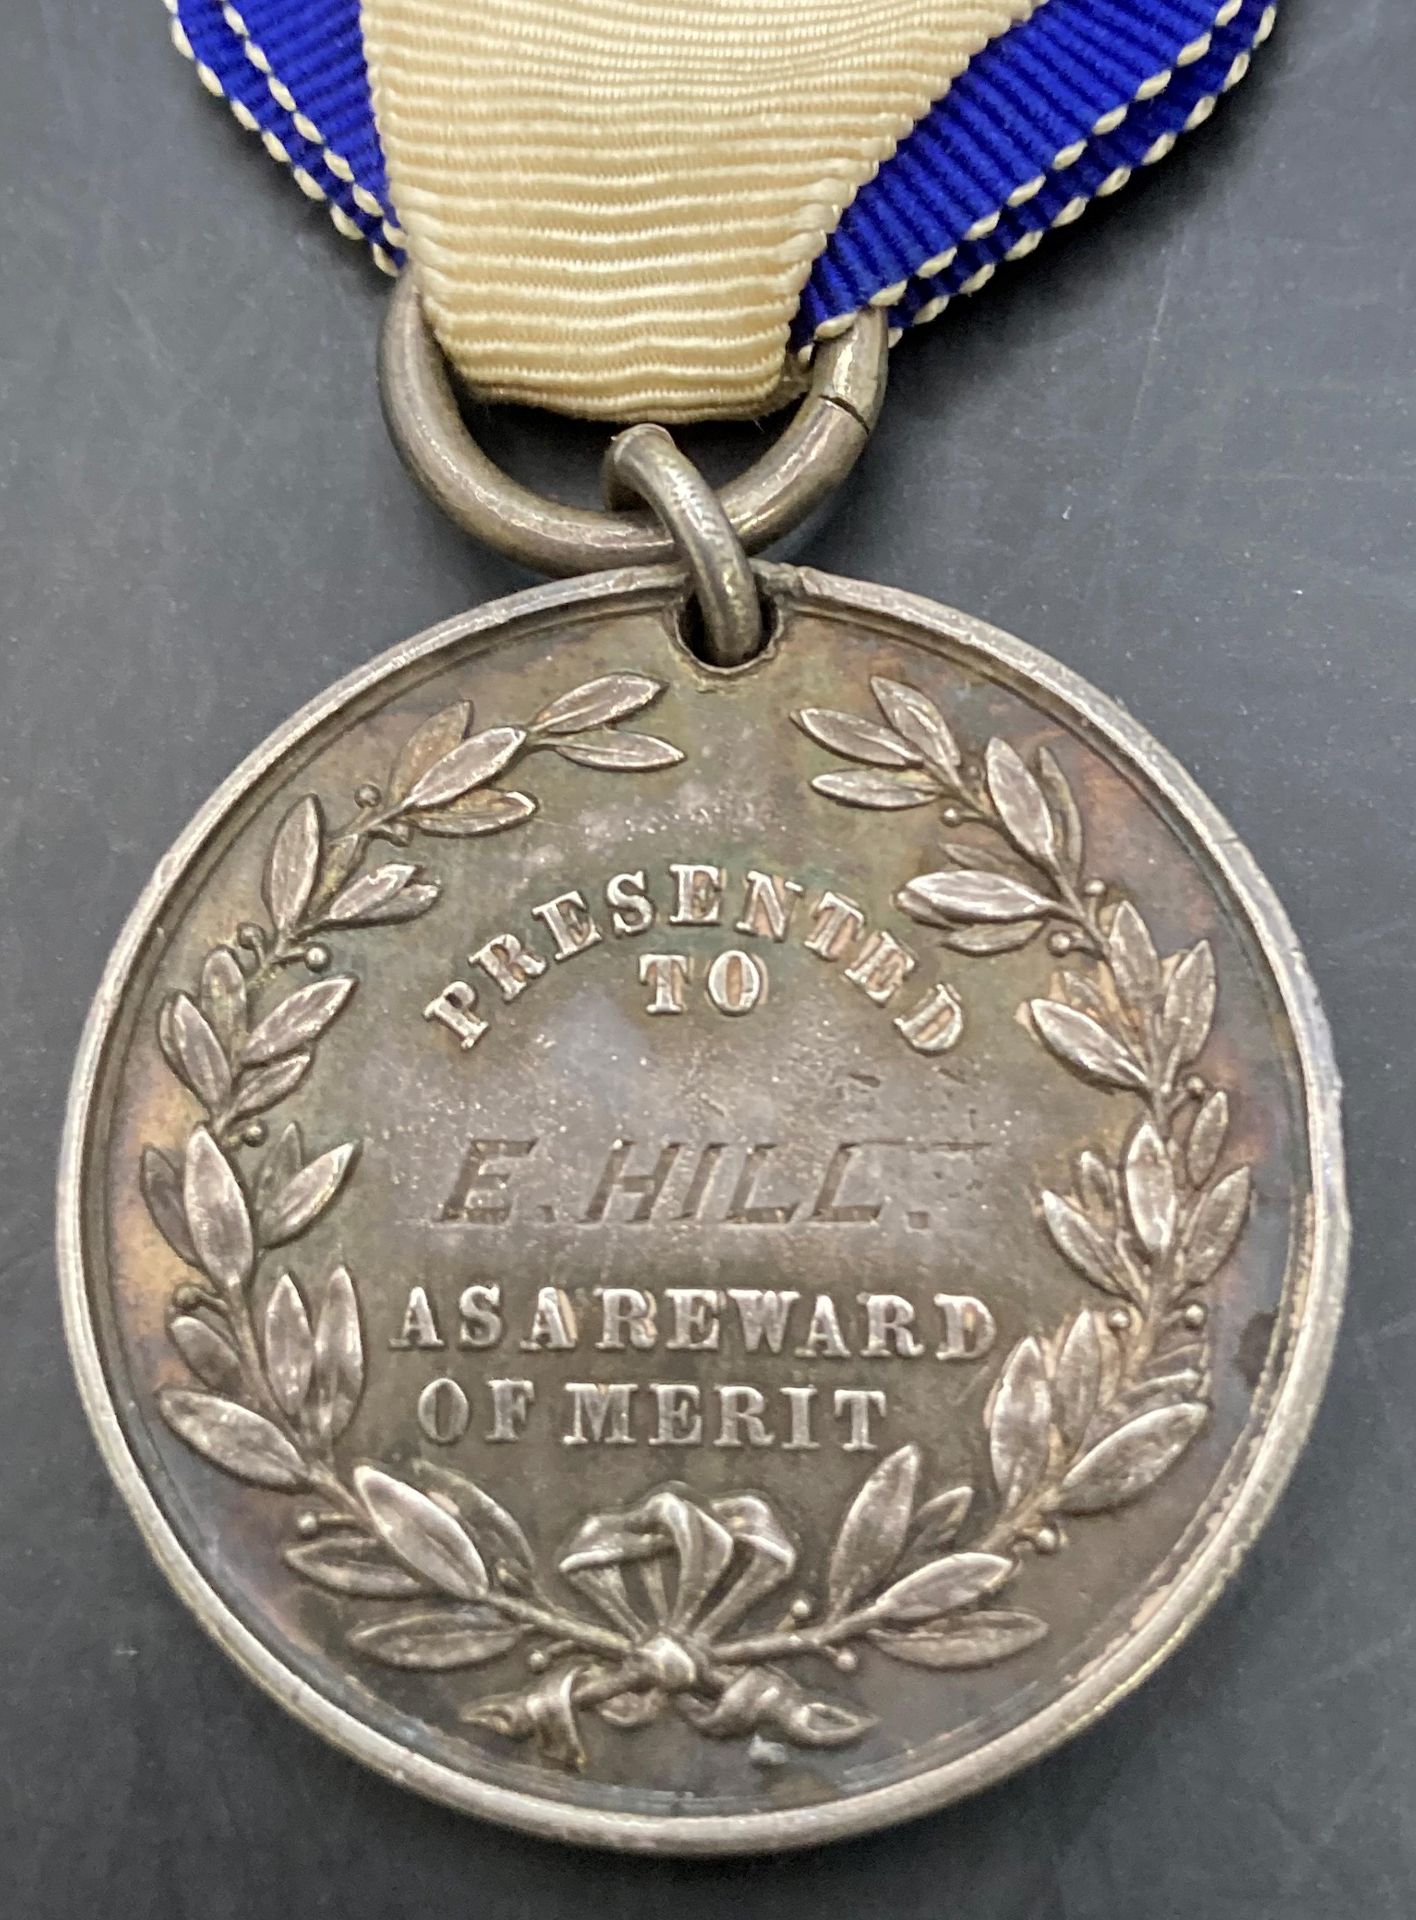 HMS Warspite Royal Naval Training Ship Medal as a Reward of Merit in silver. - Image 2 of 2